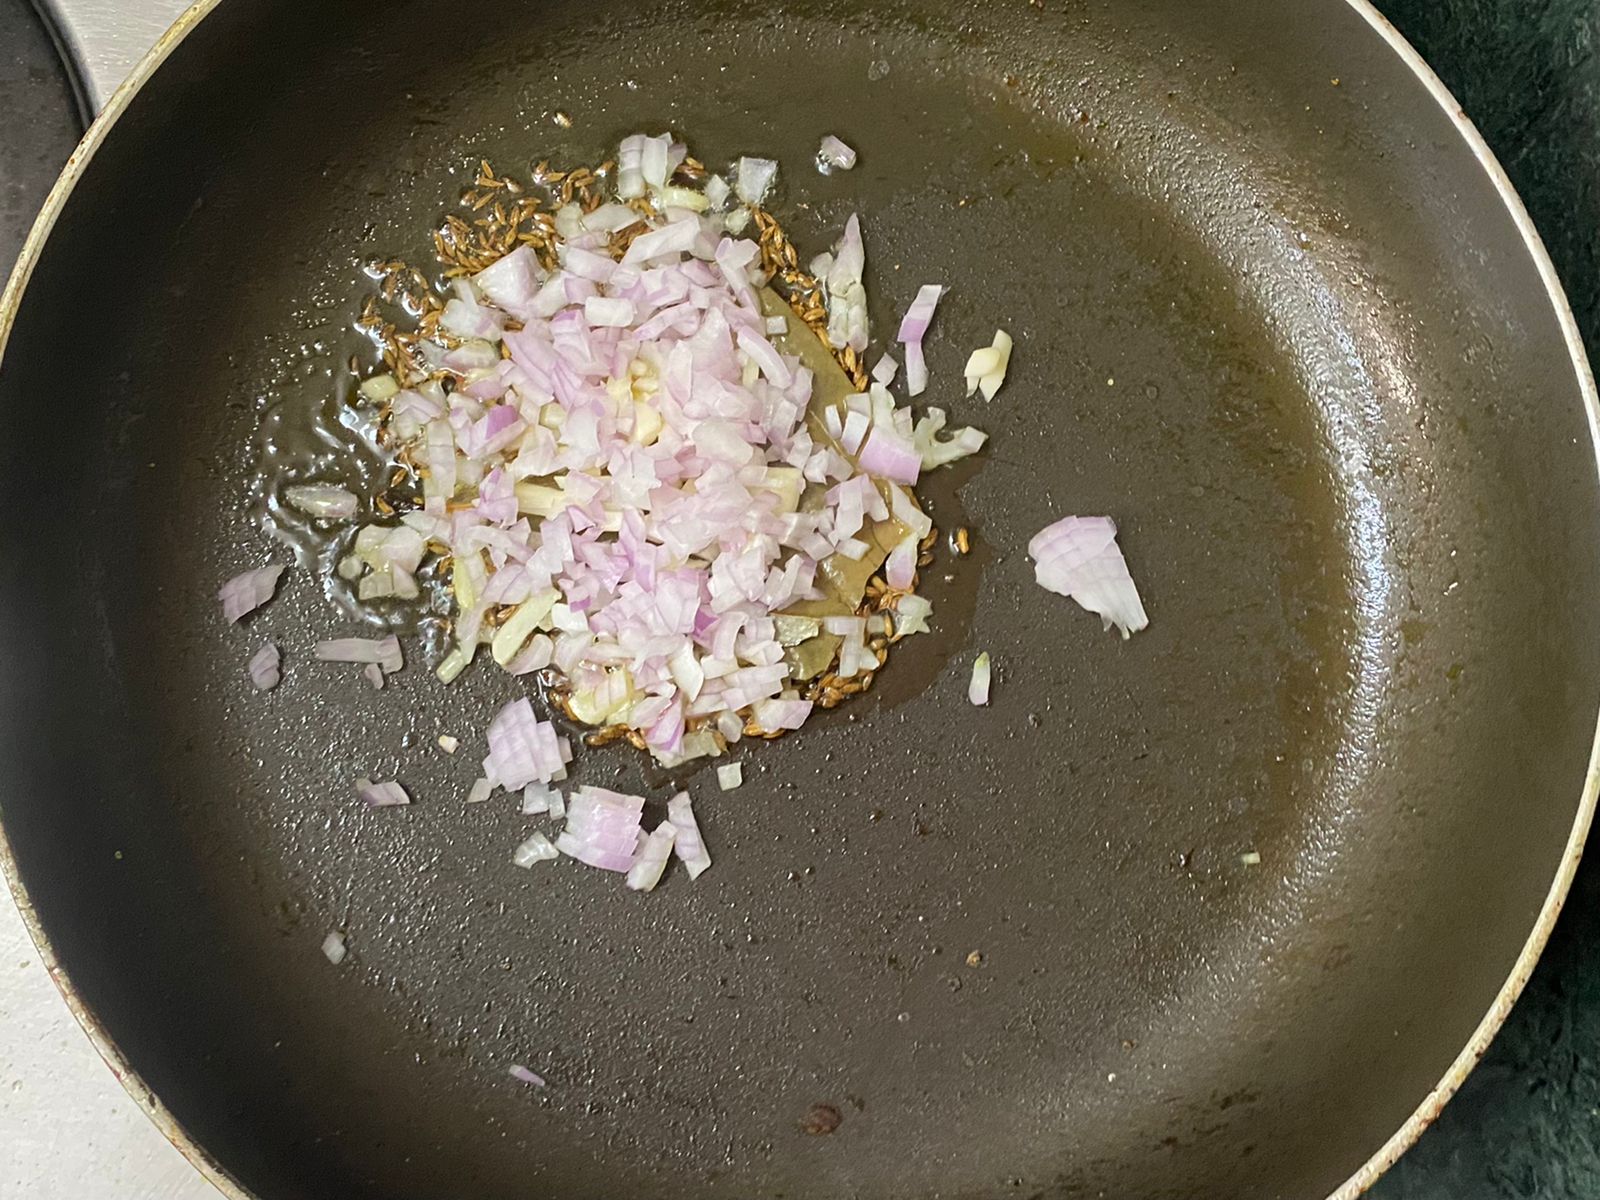 Bhindi Masala Recipe (Okra Masala)